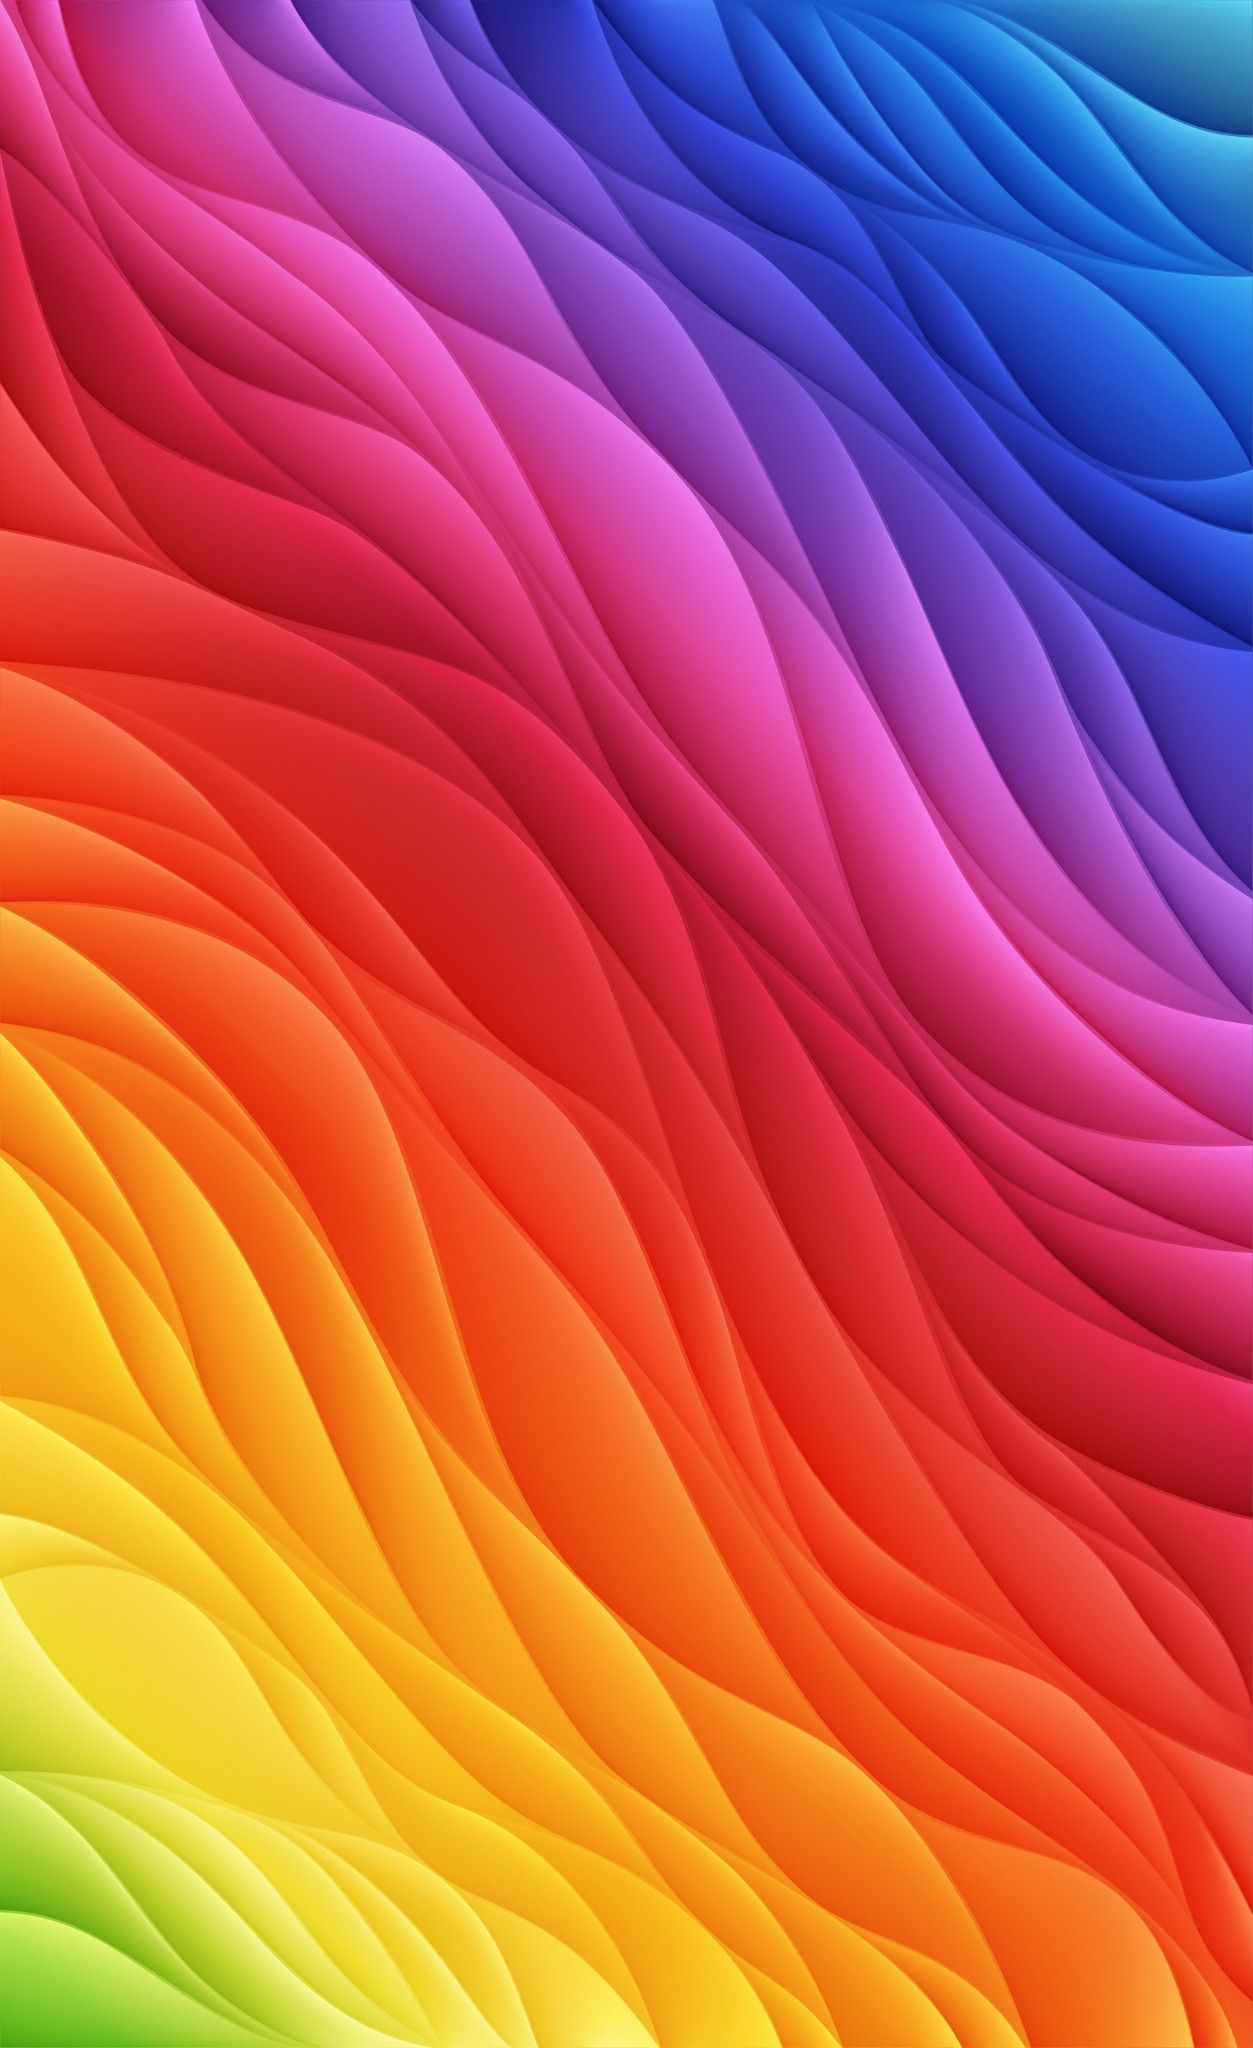 Colourful Waves #rainbow #colourful #colors #abstract #art. Fondos para fotografia, Colores del arco iris, Mejores fondos de pantalla para iphone